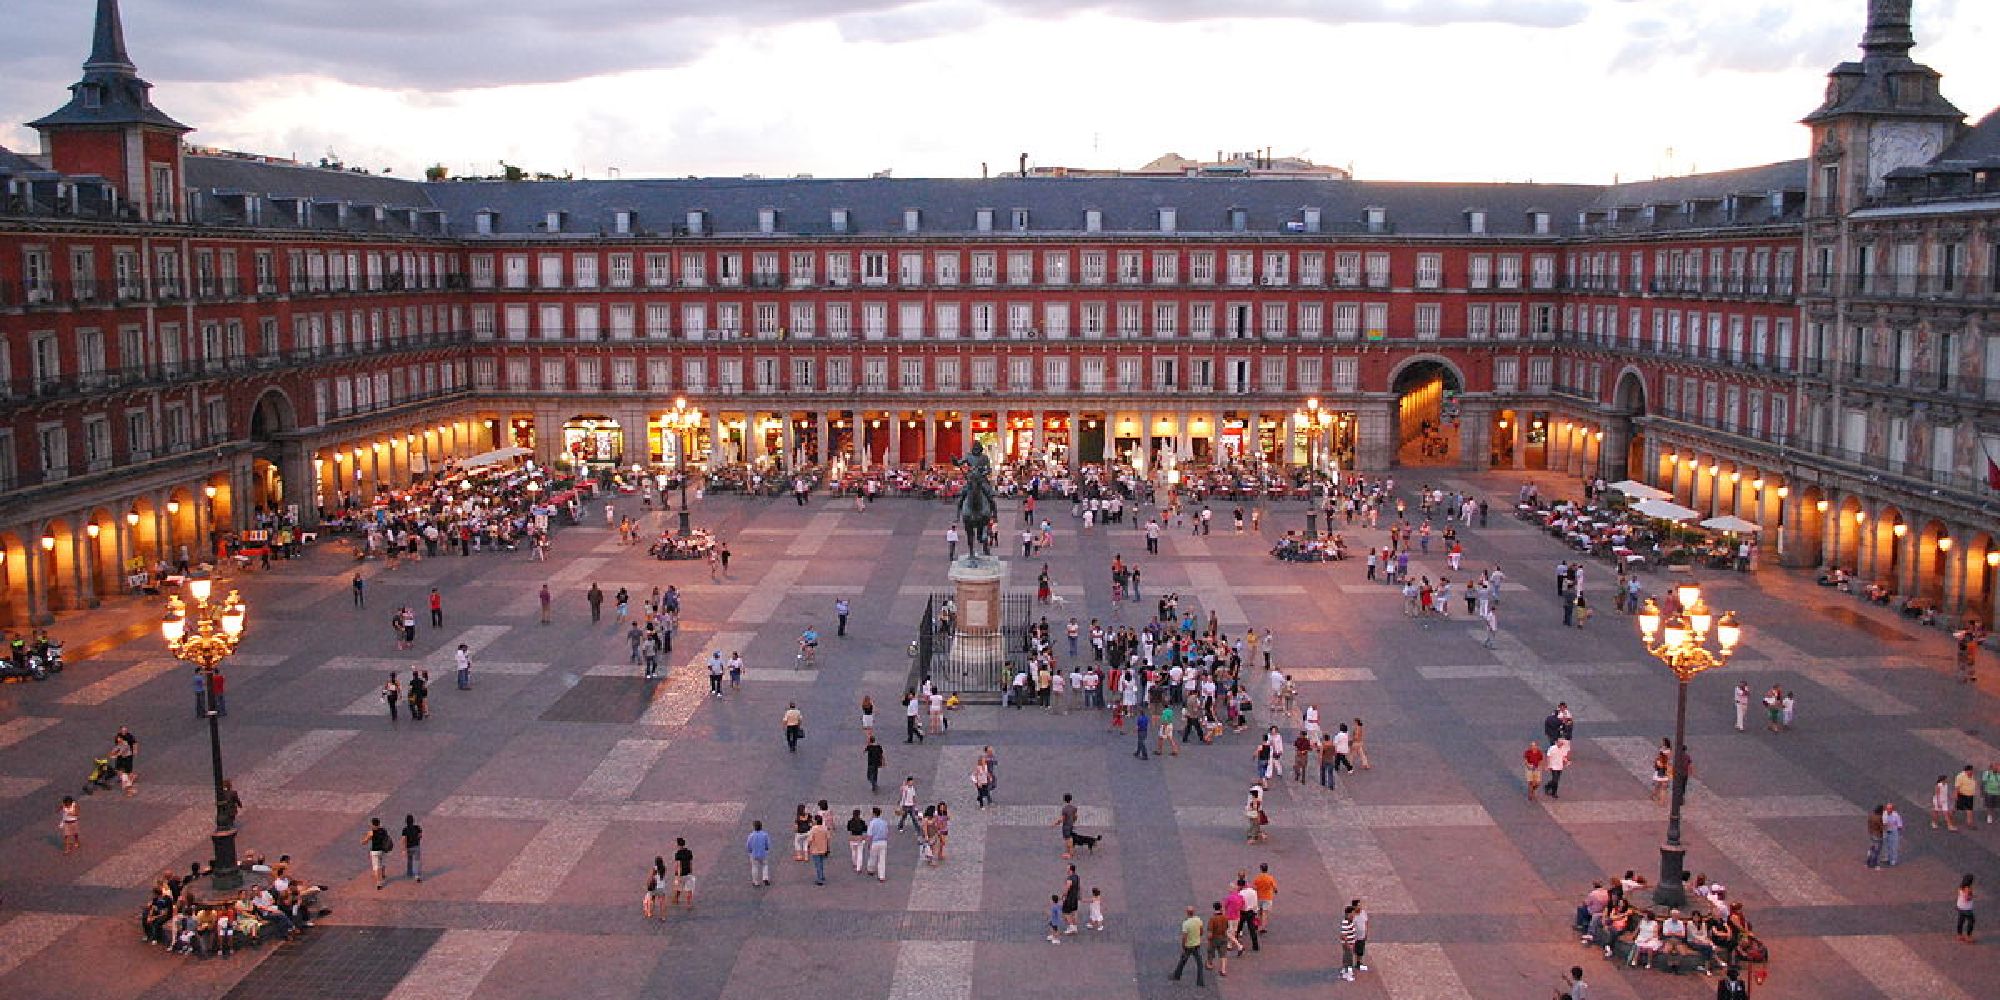 The Plaza Mayor in Madrid, Spain